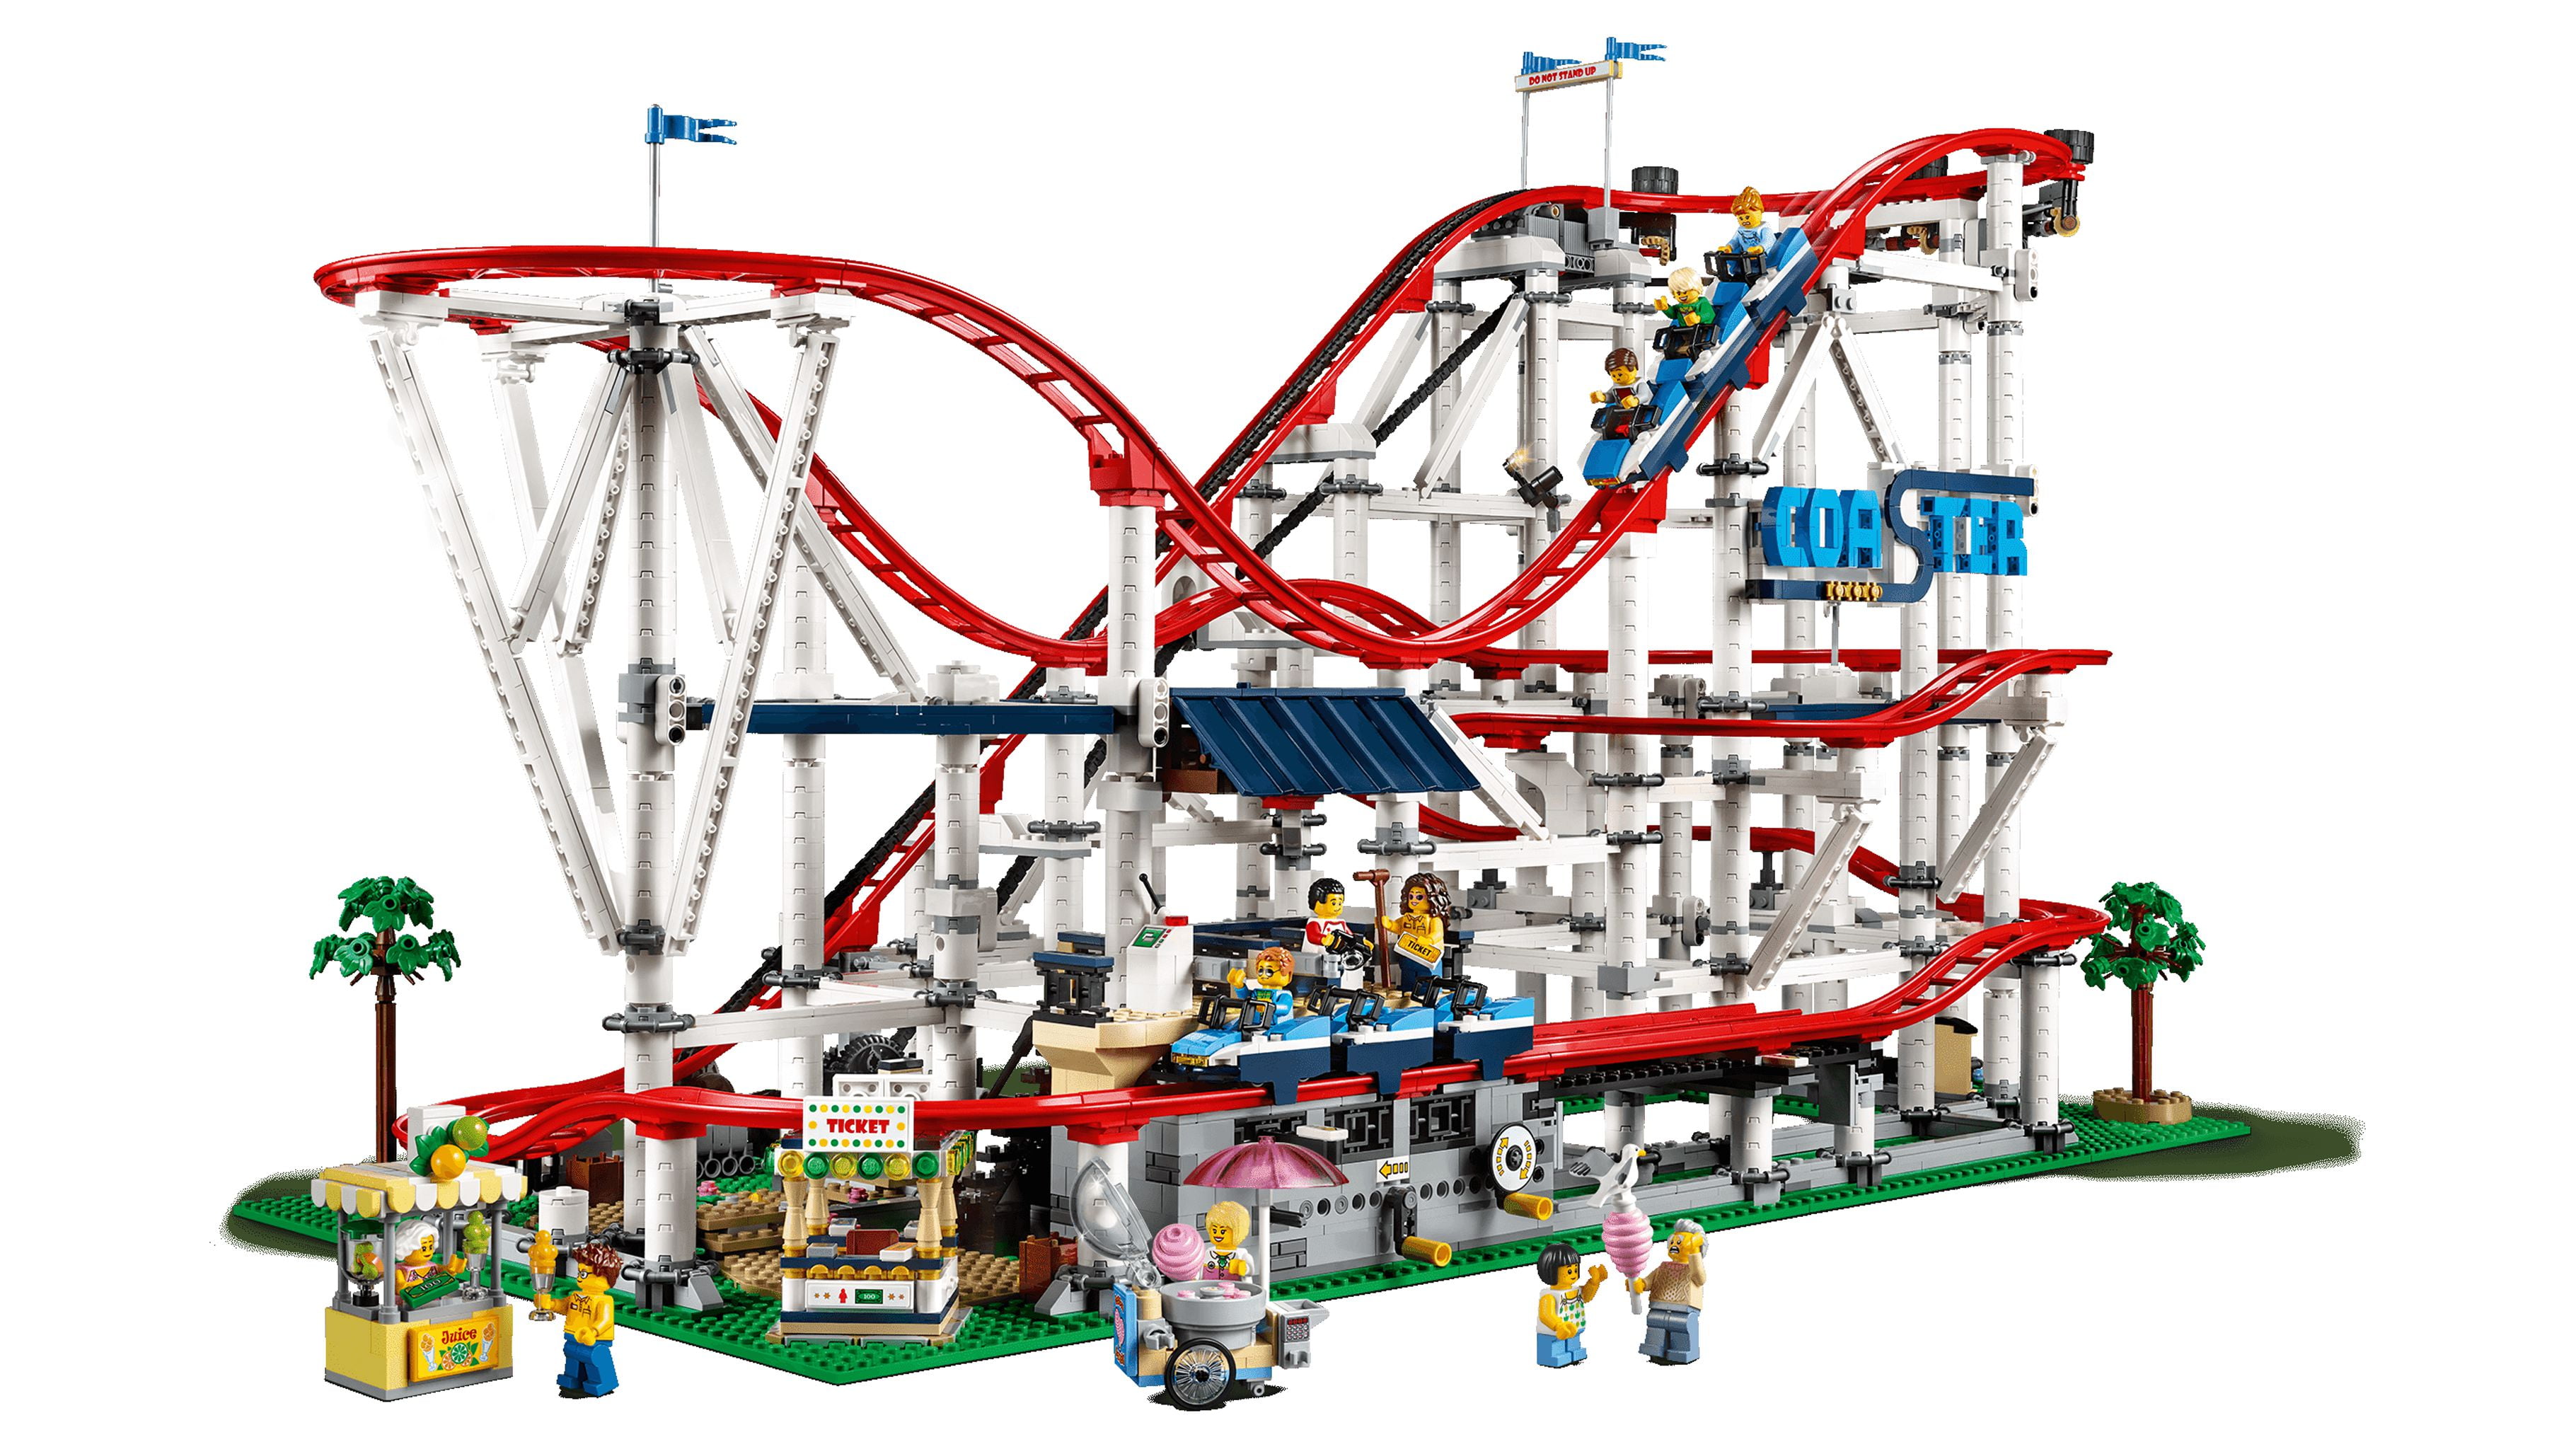 LEGO Creator Expert Roller Coaster Set 10261 - 4124 pcs - BRAND NEW SEALED